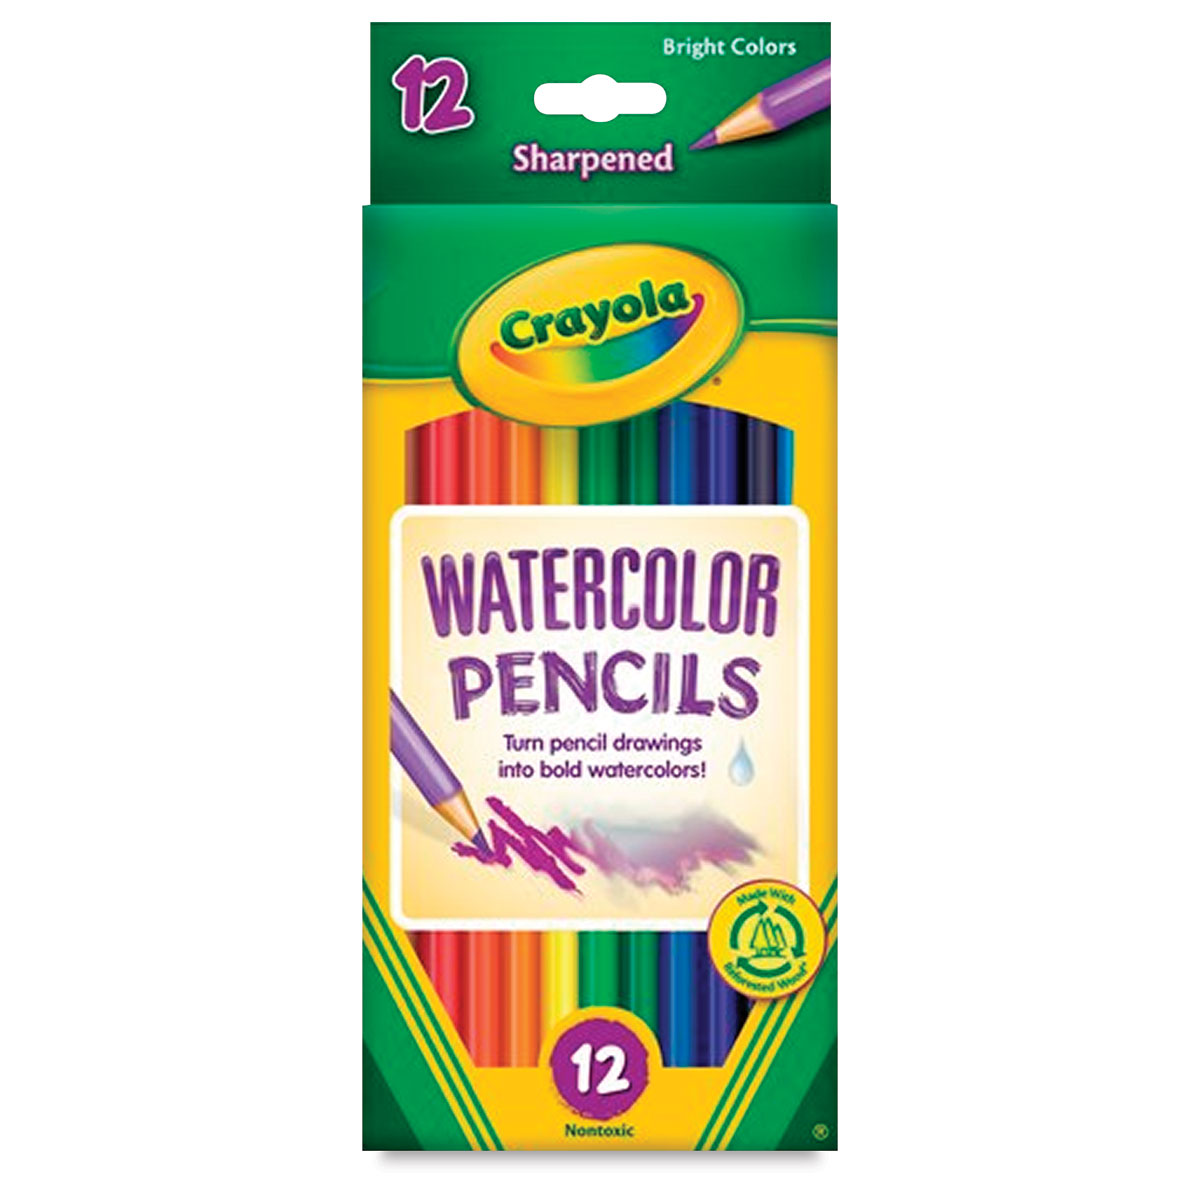 Crayola Watercolor Pencils | Blick Art Materials